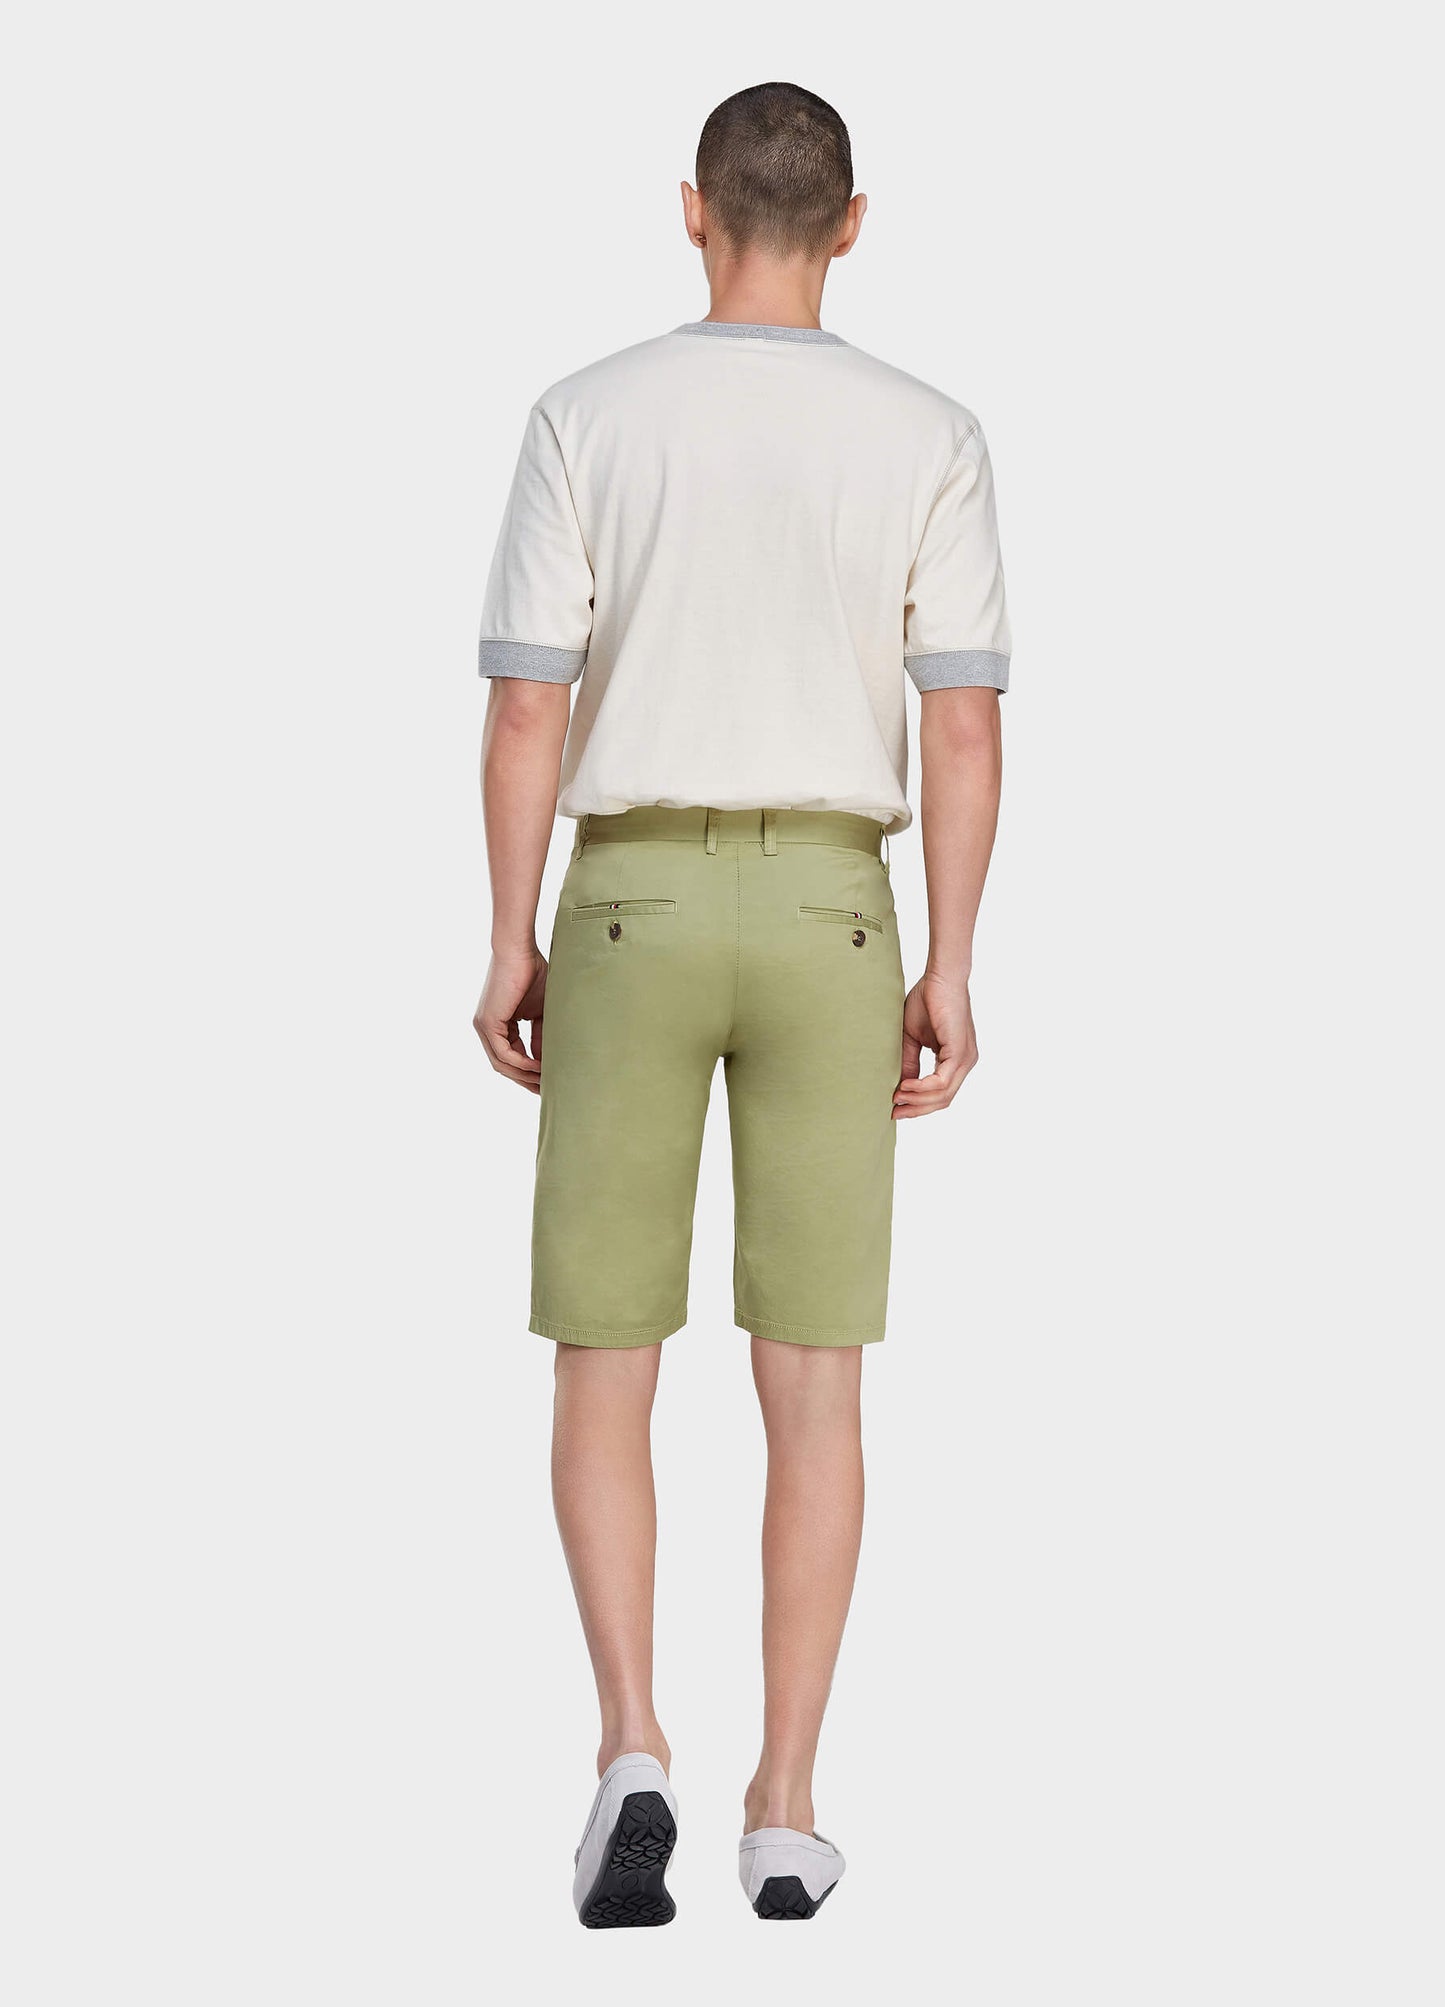 Men's Casual Button Closure Zipper Elasticity Solid Shorts with Slant Pocket-Green back view